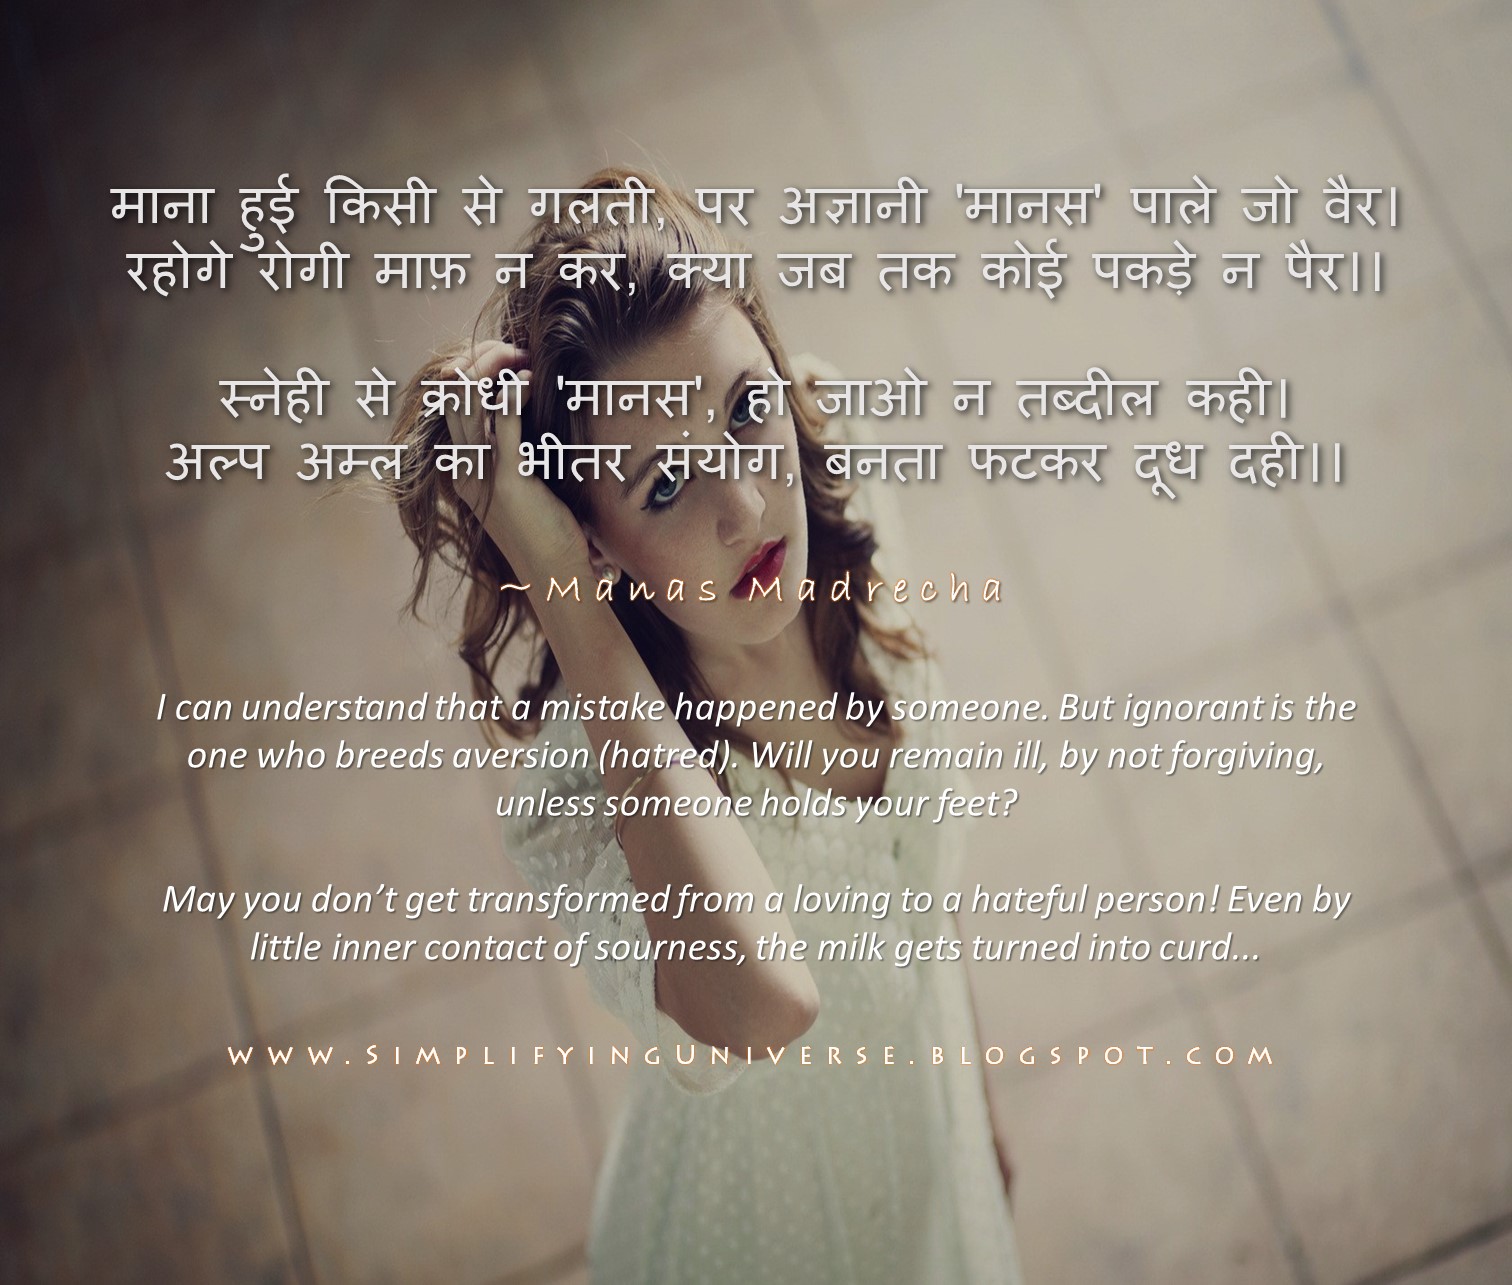 Scars Heal - Hindi Poem on Scars & Forgiveness | Manas Madrecha blog